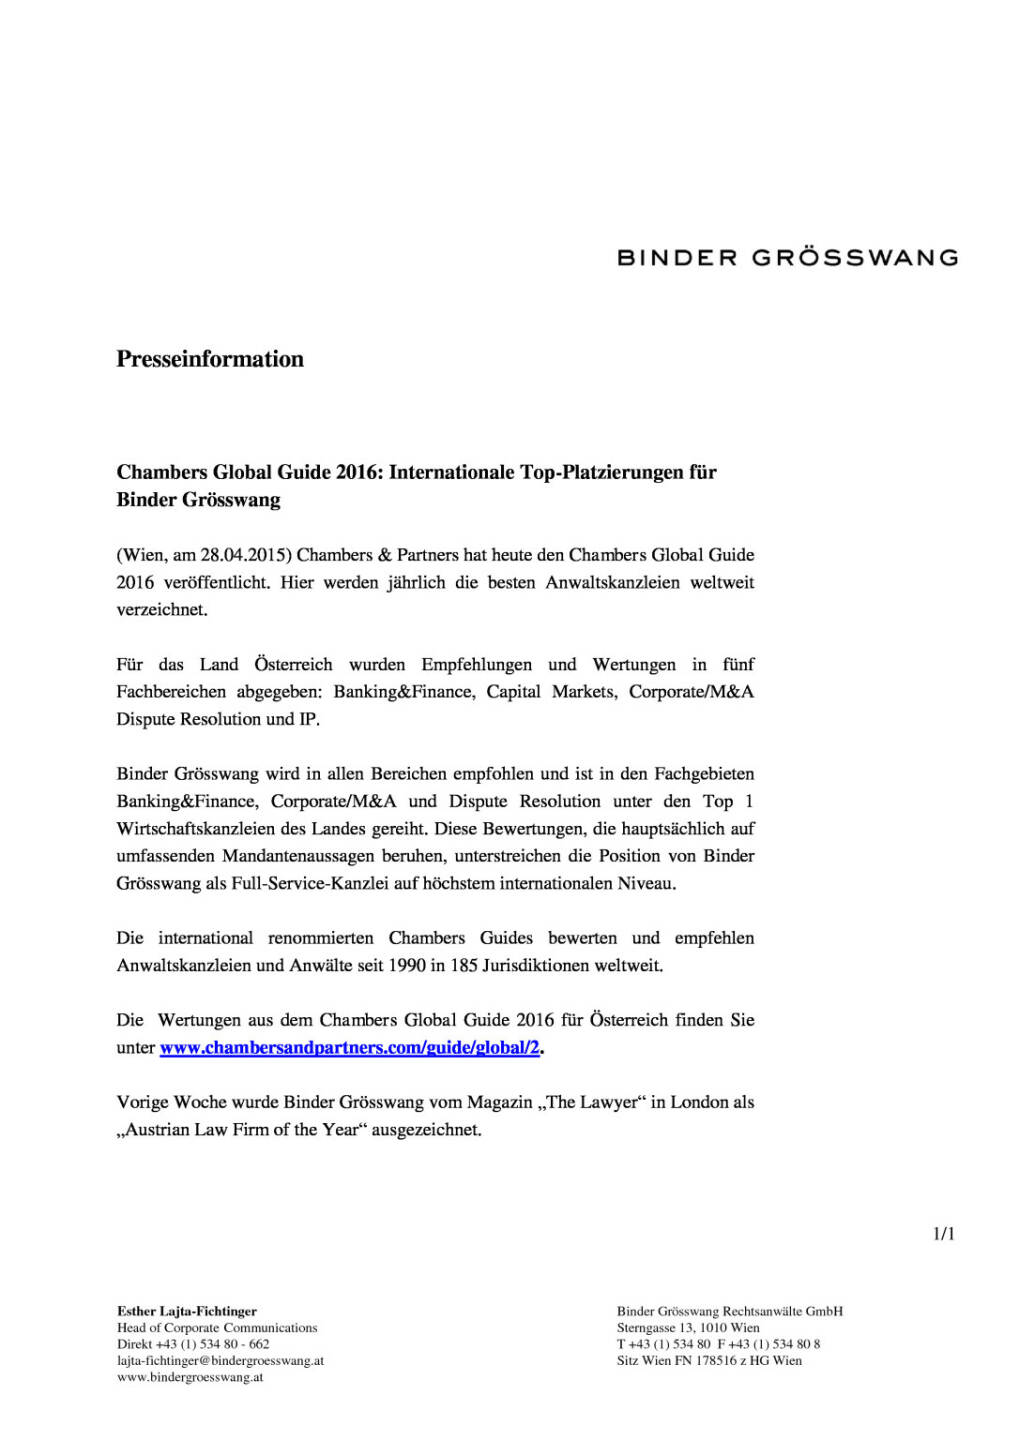 Binder Grösswang unter den top internationalen Kanzleien, Seite 1/1, komplettes Dokument unter http://boerse-social.com/static/uploads/file_799_binder_grosswang_unter_den_top_internationalen_kanzleien.pdf